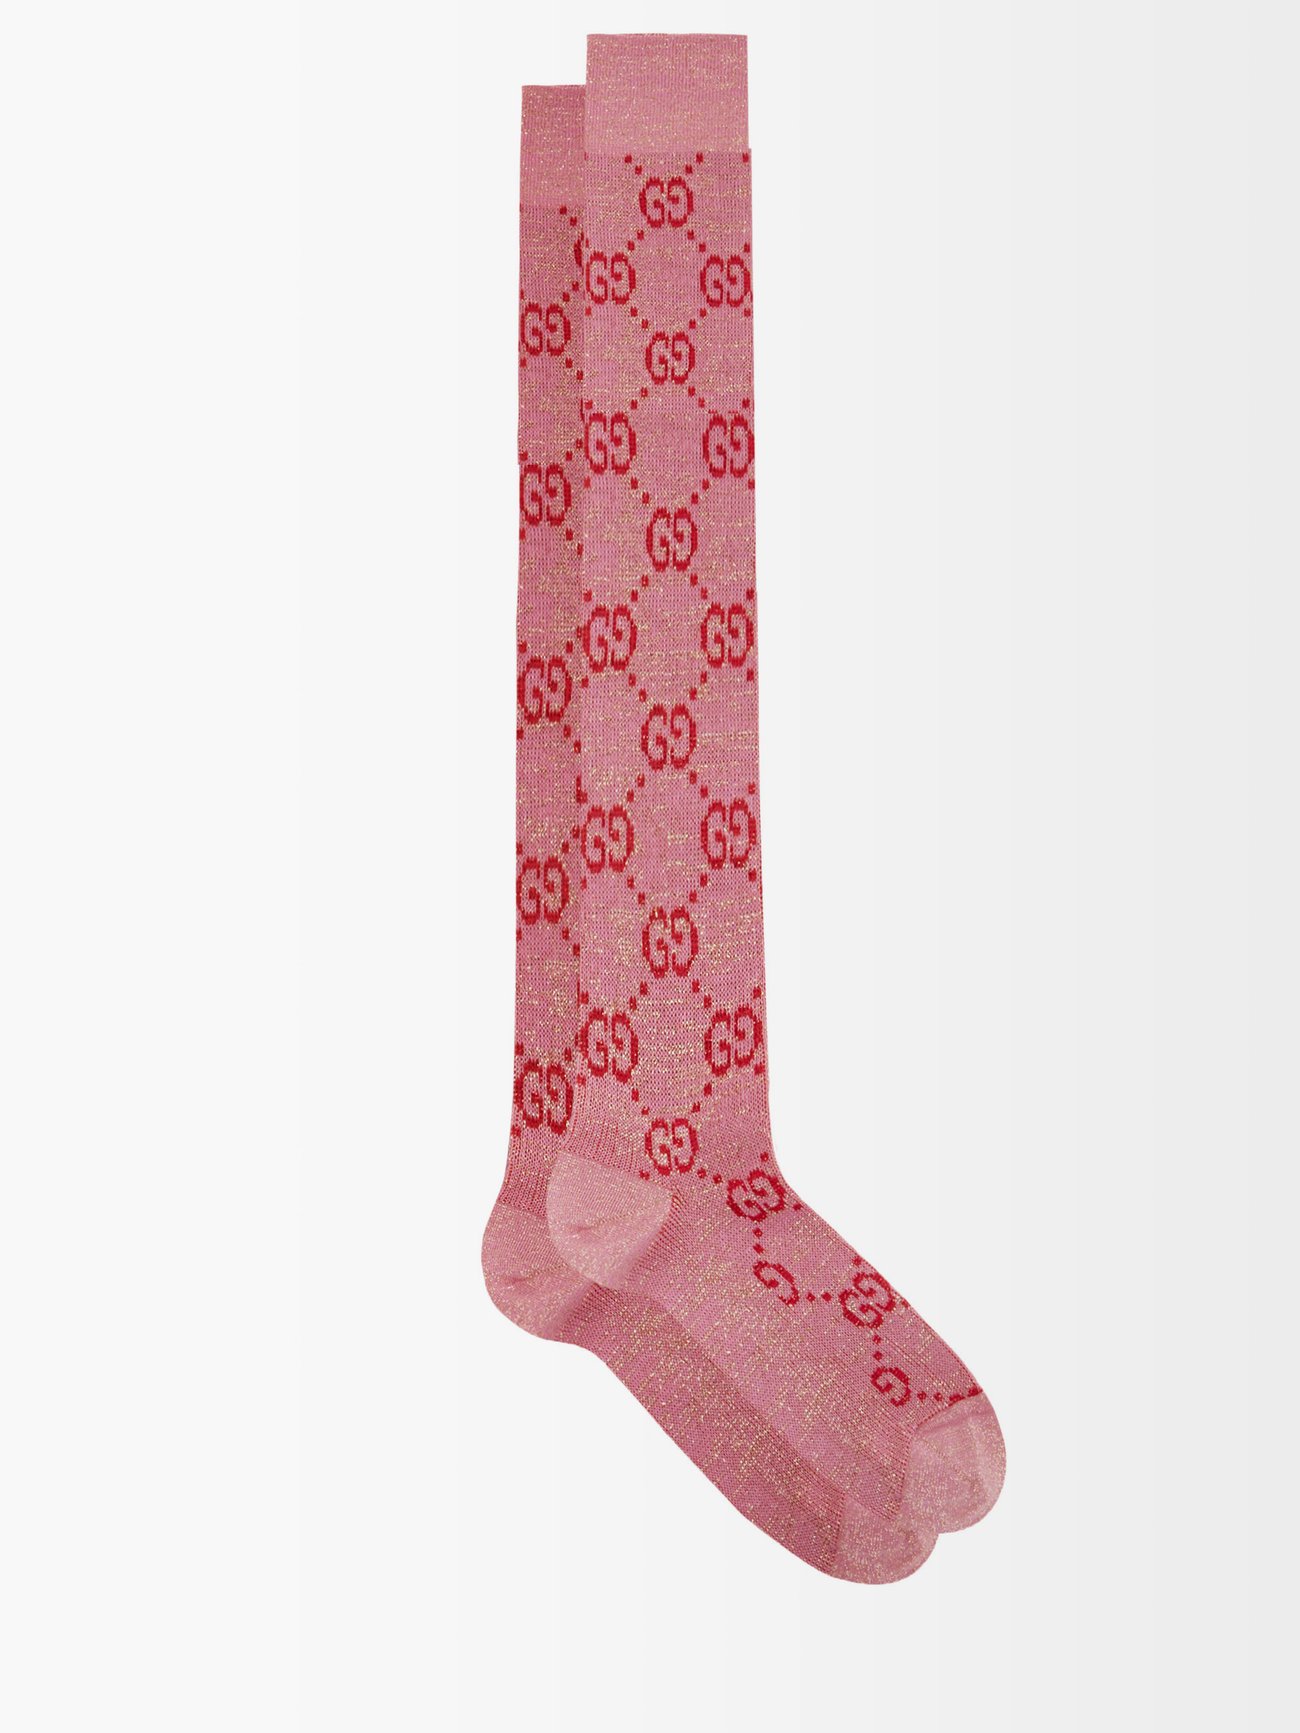 Gucci Socks Pink Flash Sales | website.jkuat.ac.ke